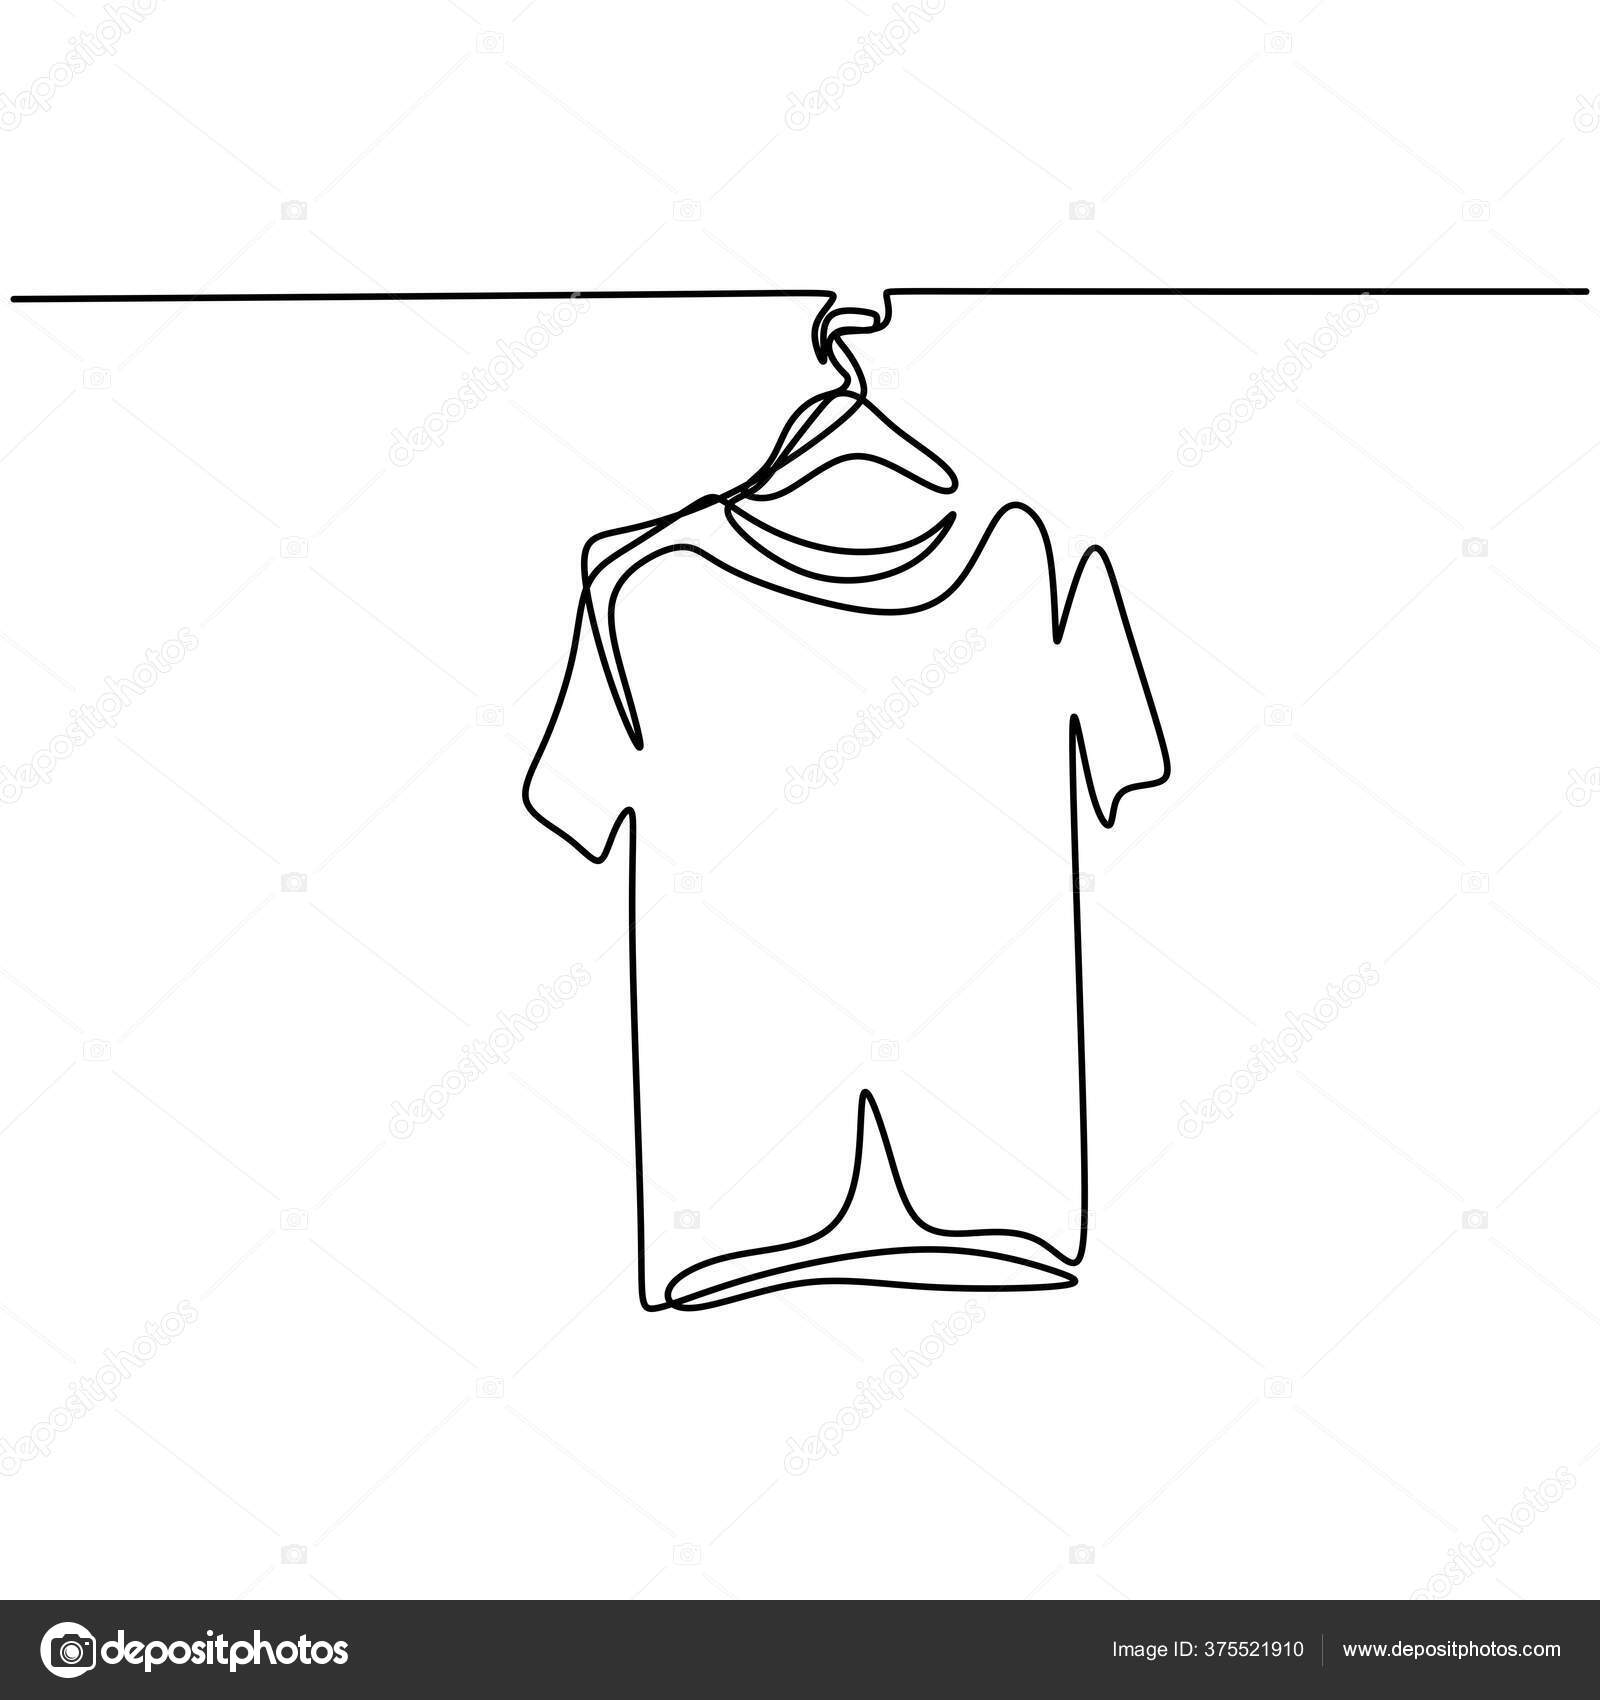 https://st3.depositphotos.com/17601448/37552/v/1600/depositphotos_375521910-stock-illustration-one-line-drawing-isolated-vector.jpg